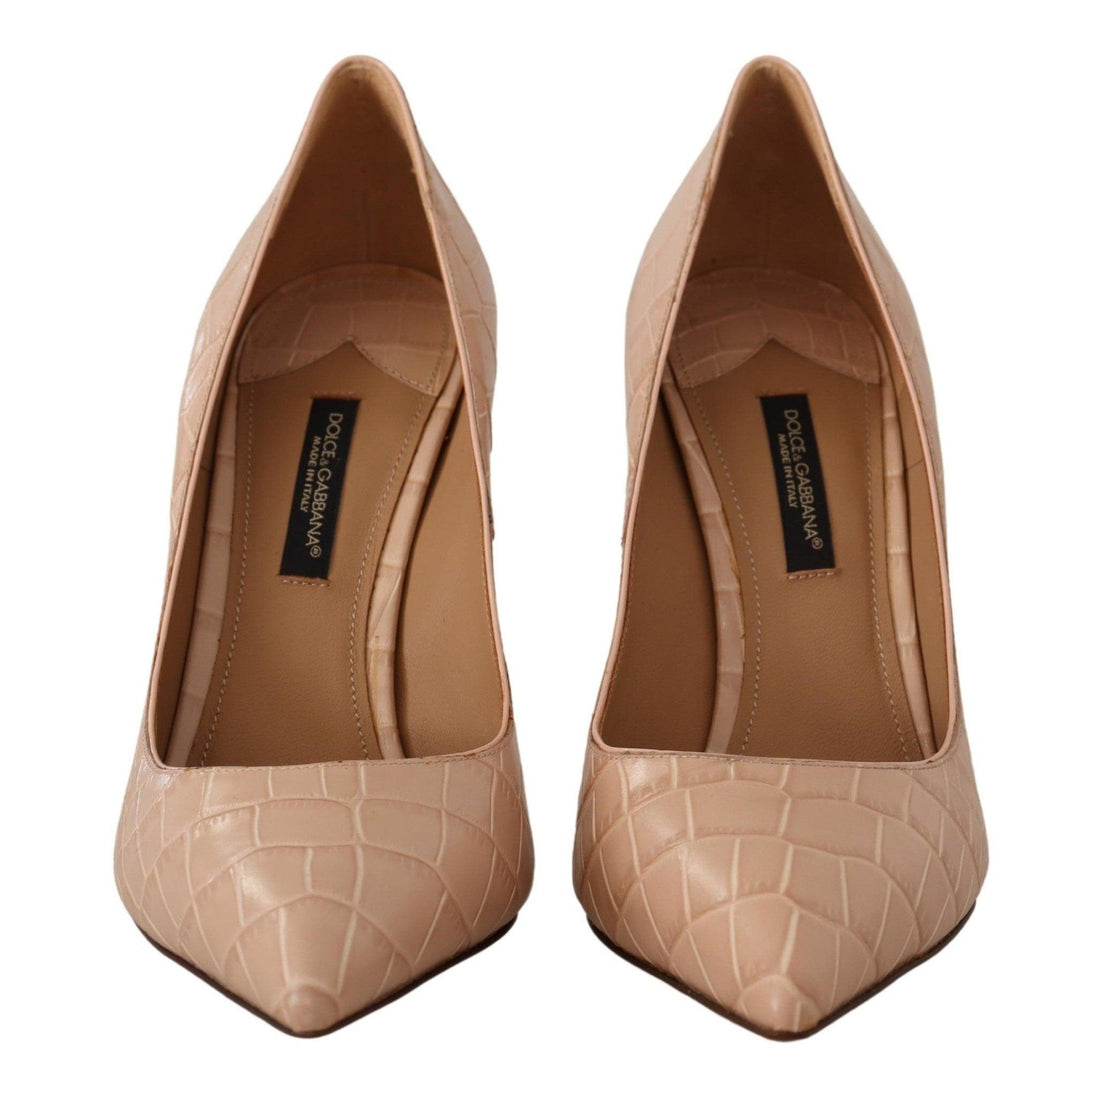 Dolce & Gabbana Beige Leather Bellucci Heels Pumps Shoes